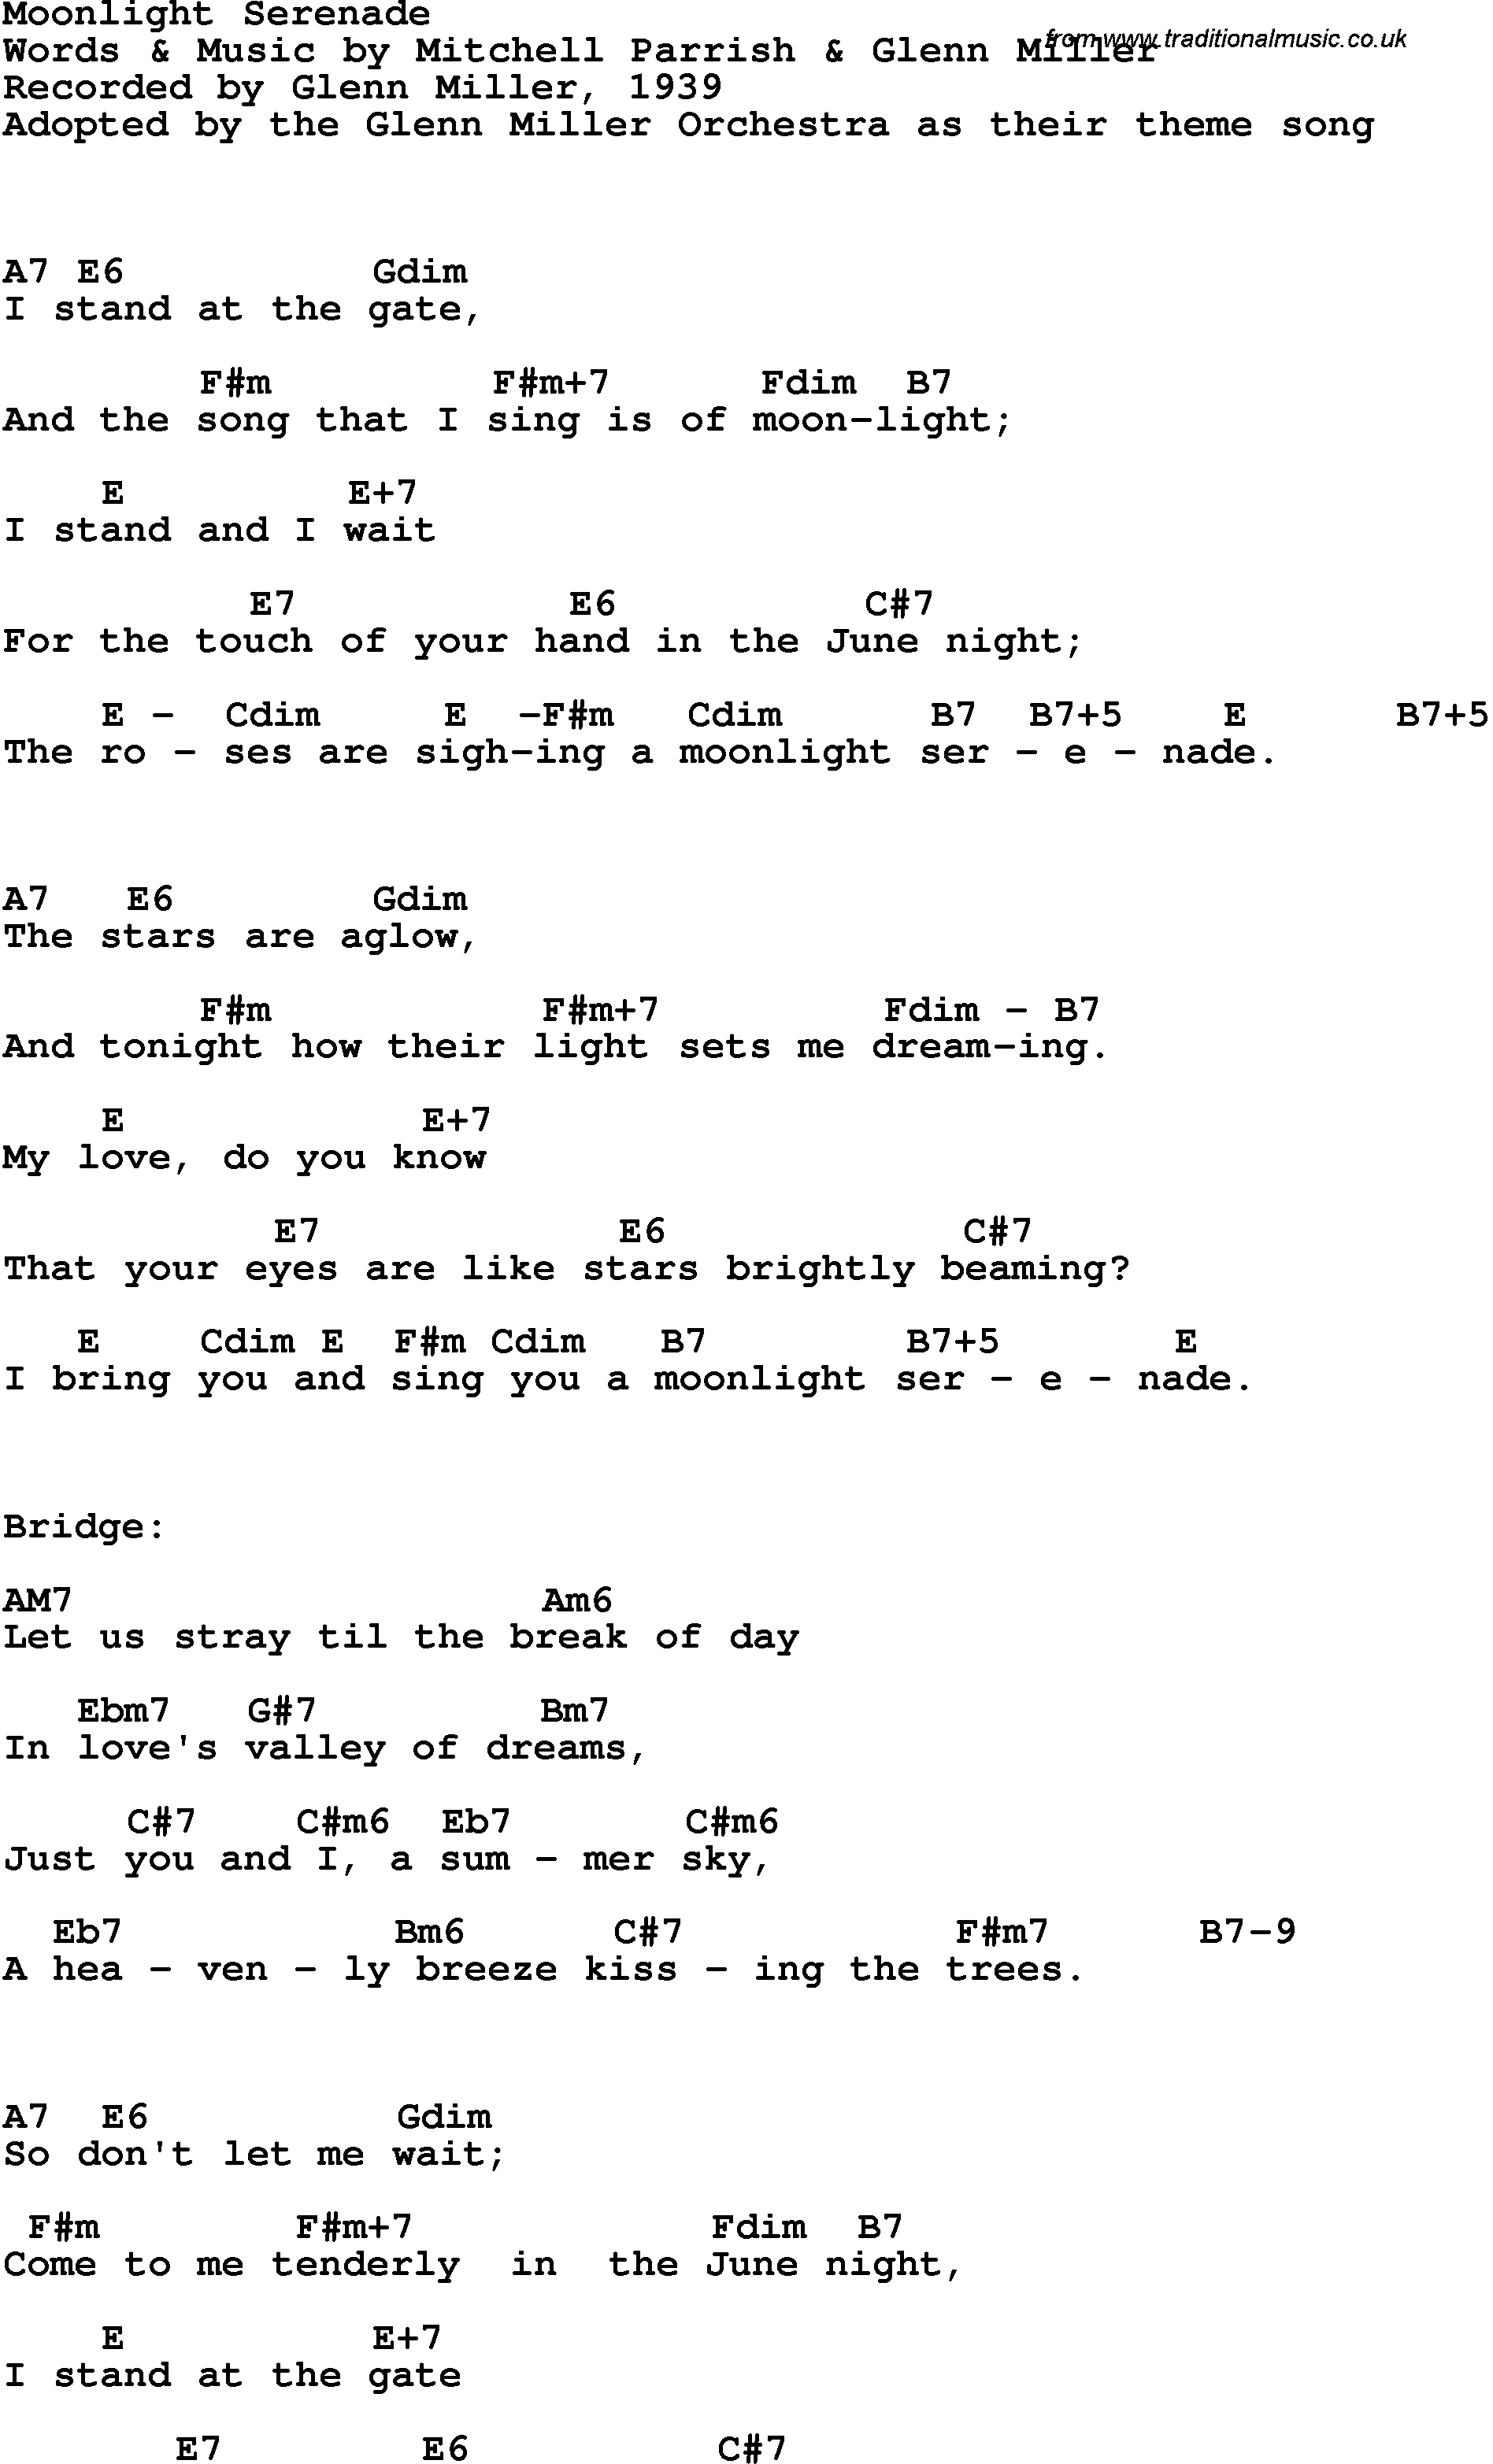 Song Lyrics with guitar chords for Moonlight Serenade - Glenn Miller, 1939